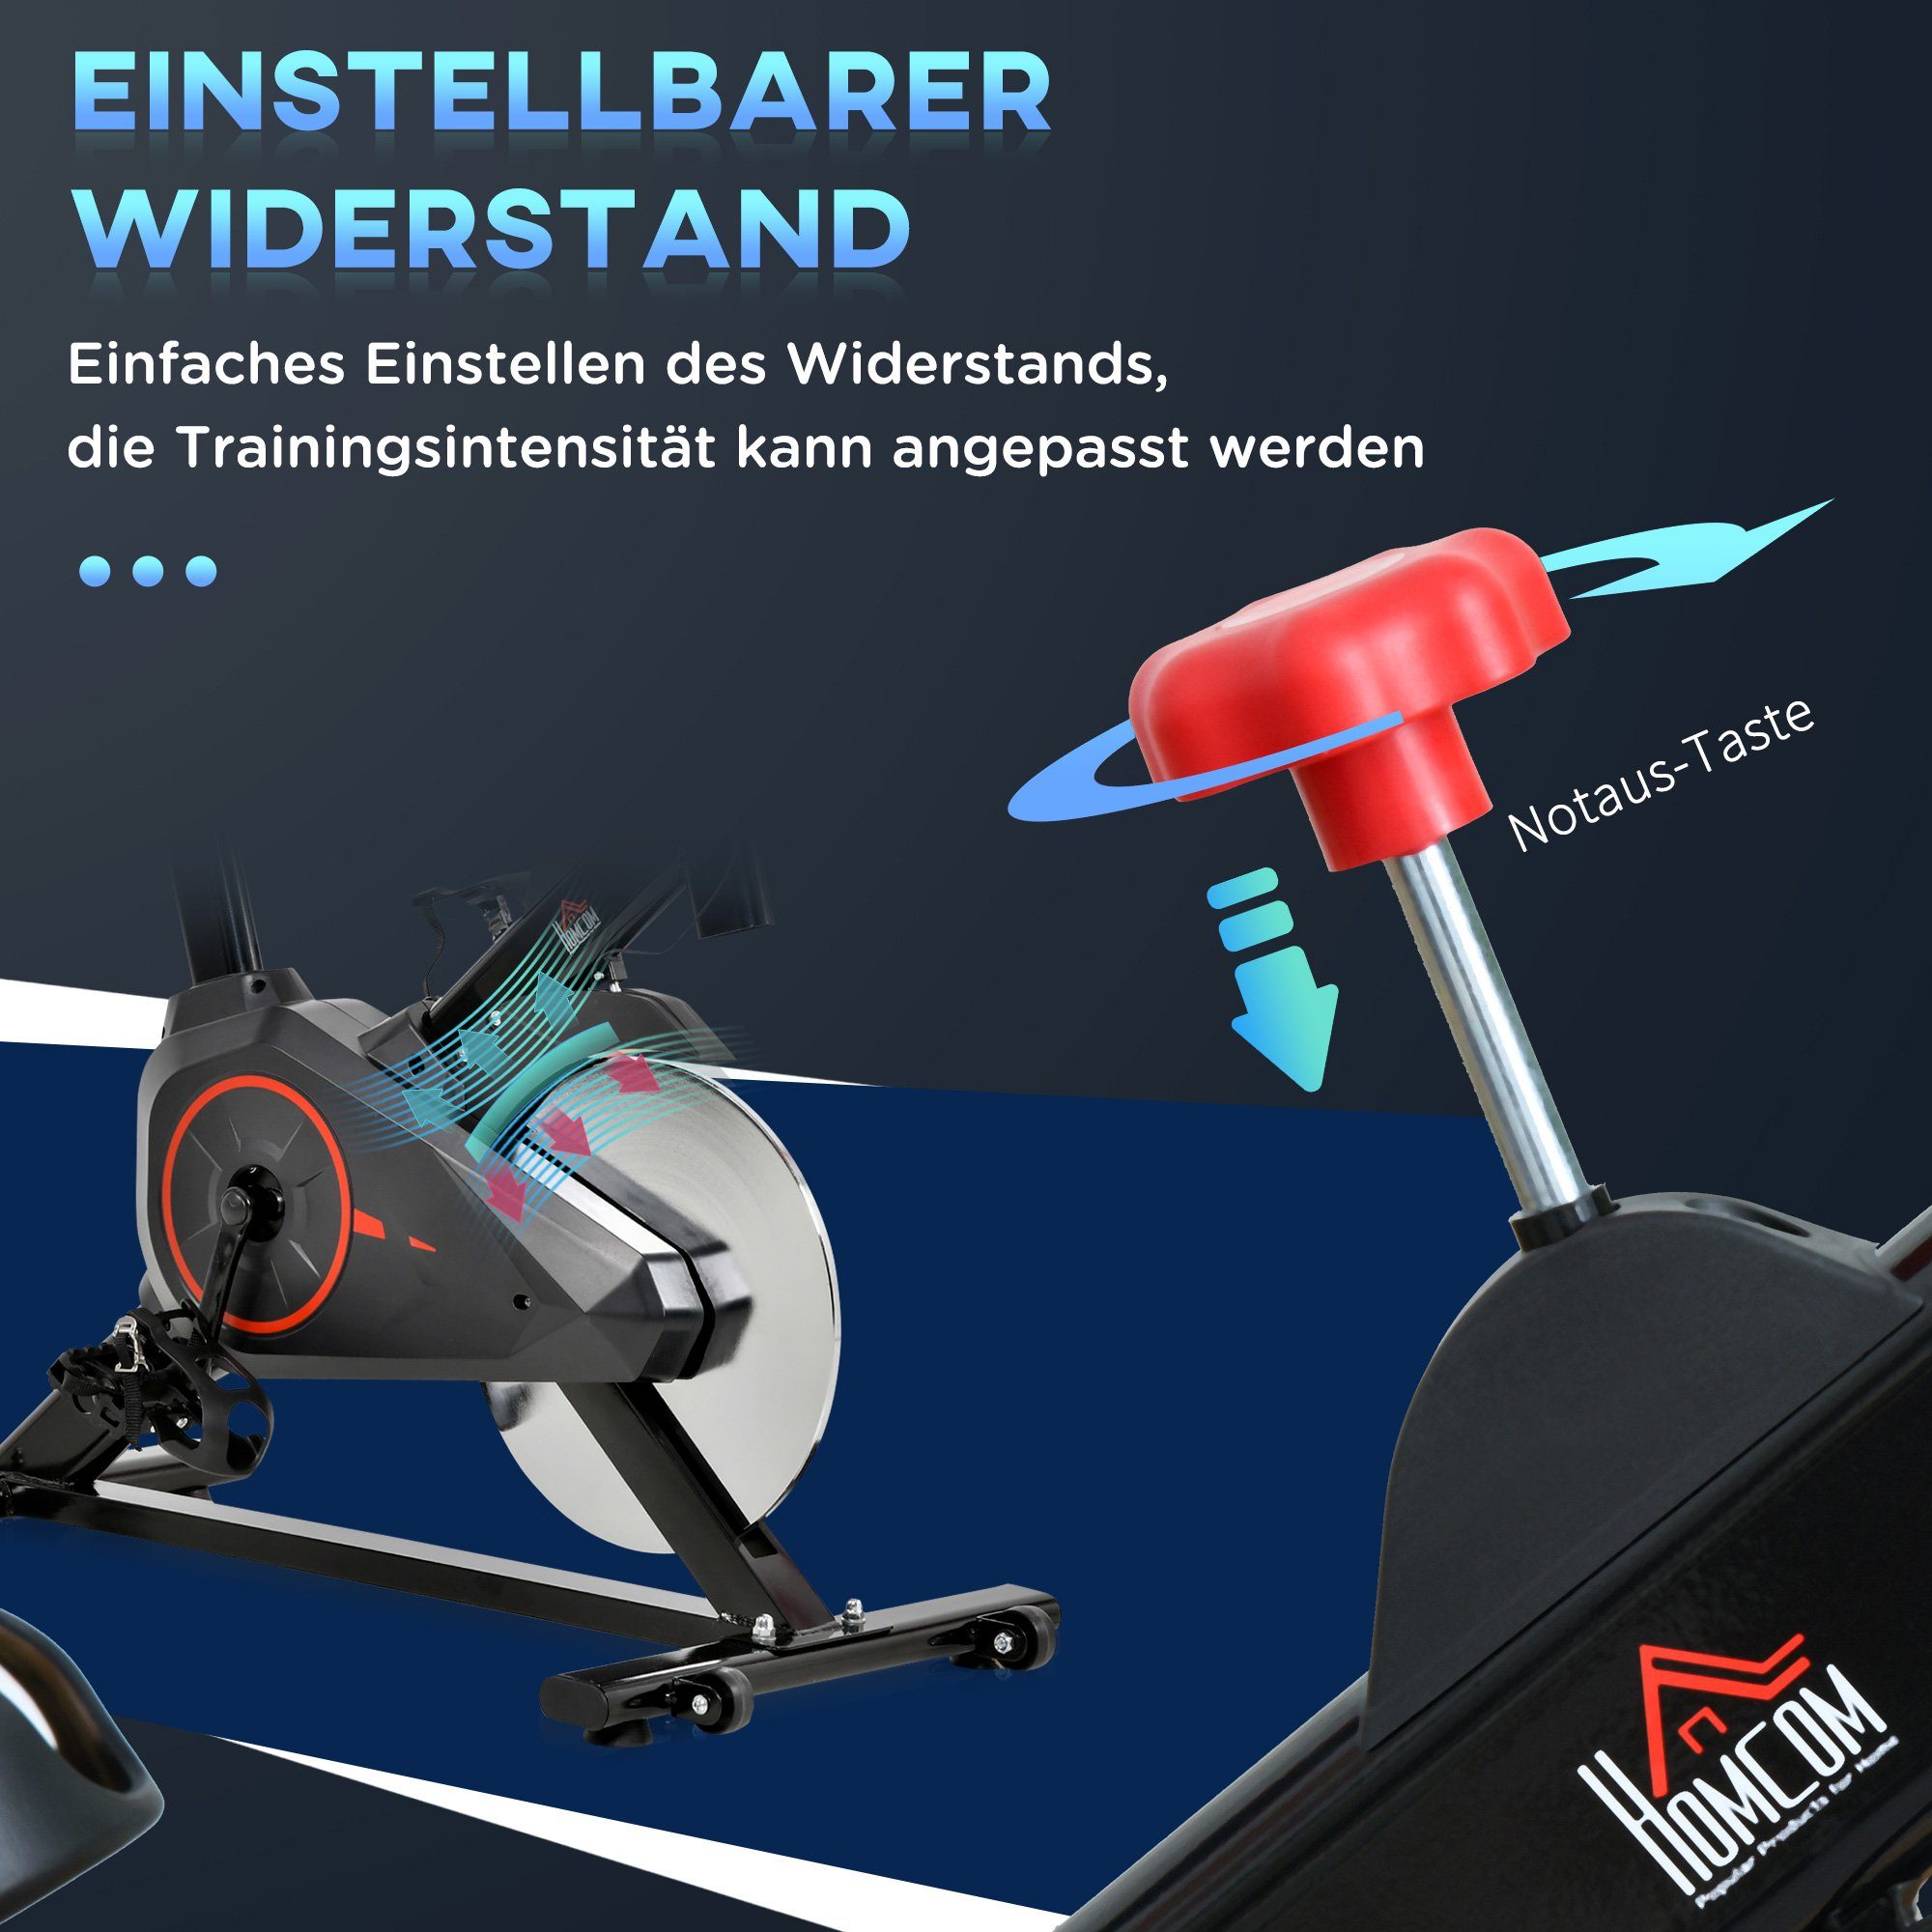 85L Cycling Heimtrainer Indoor Fitnessfahrrad), x (1-tlg., 46B cm 114H Gym HOMCOM Trainer x Bike Home Fahrradtrainer